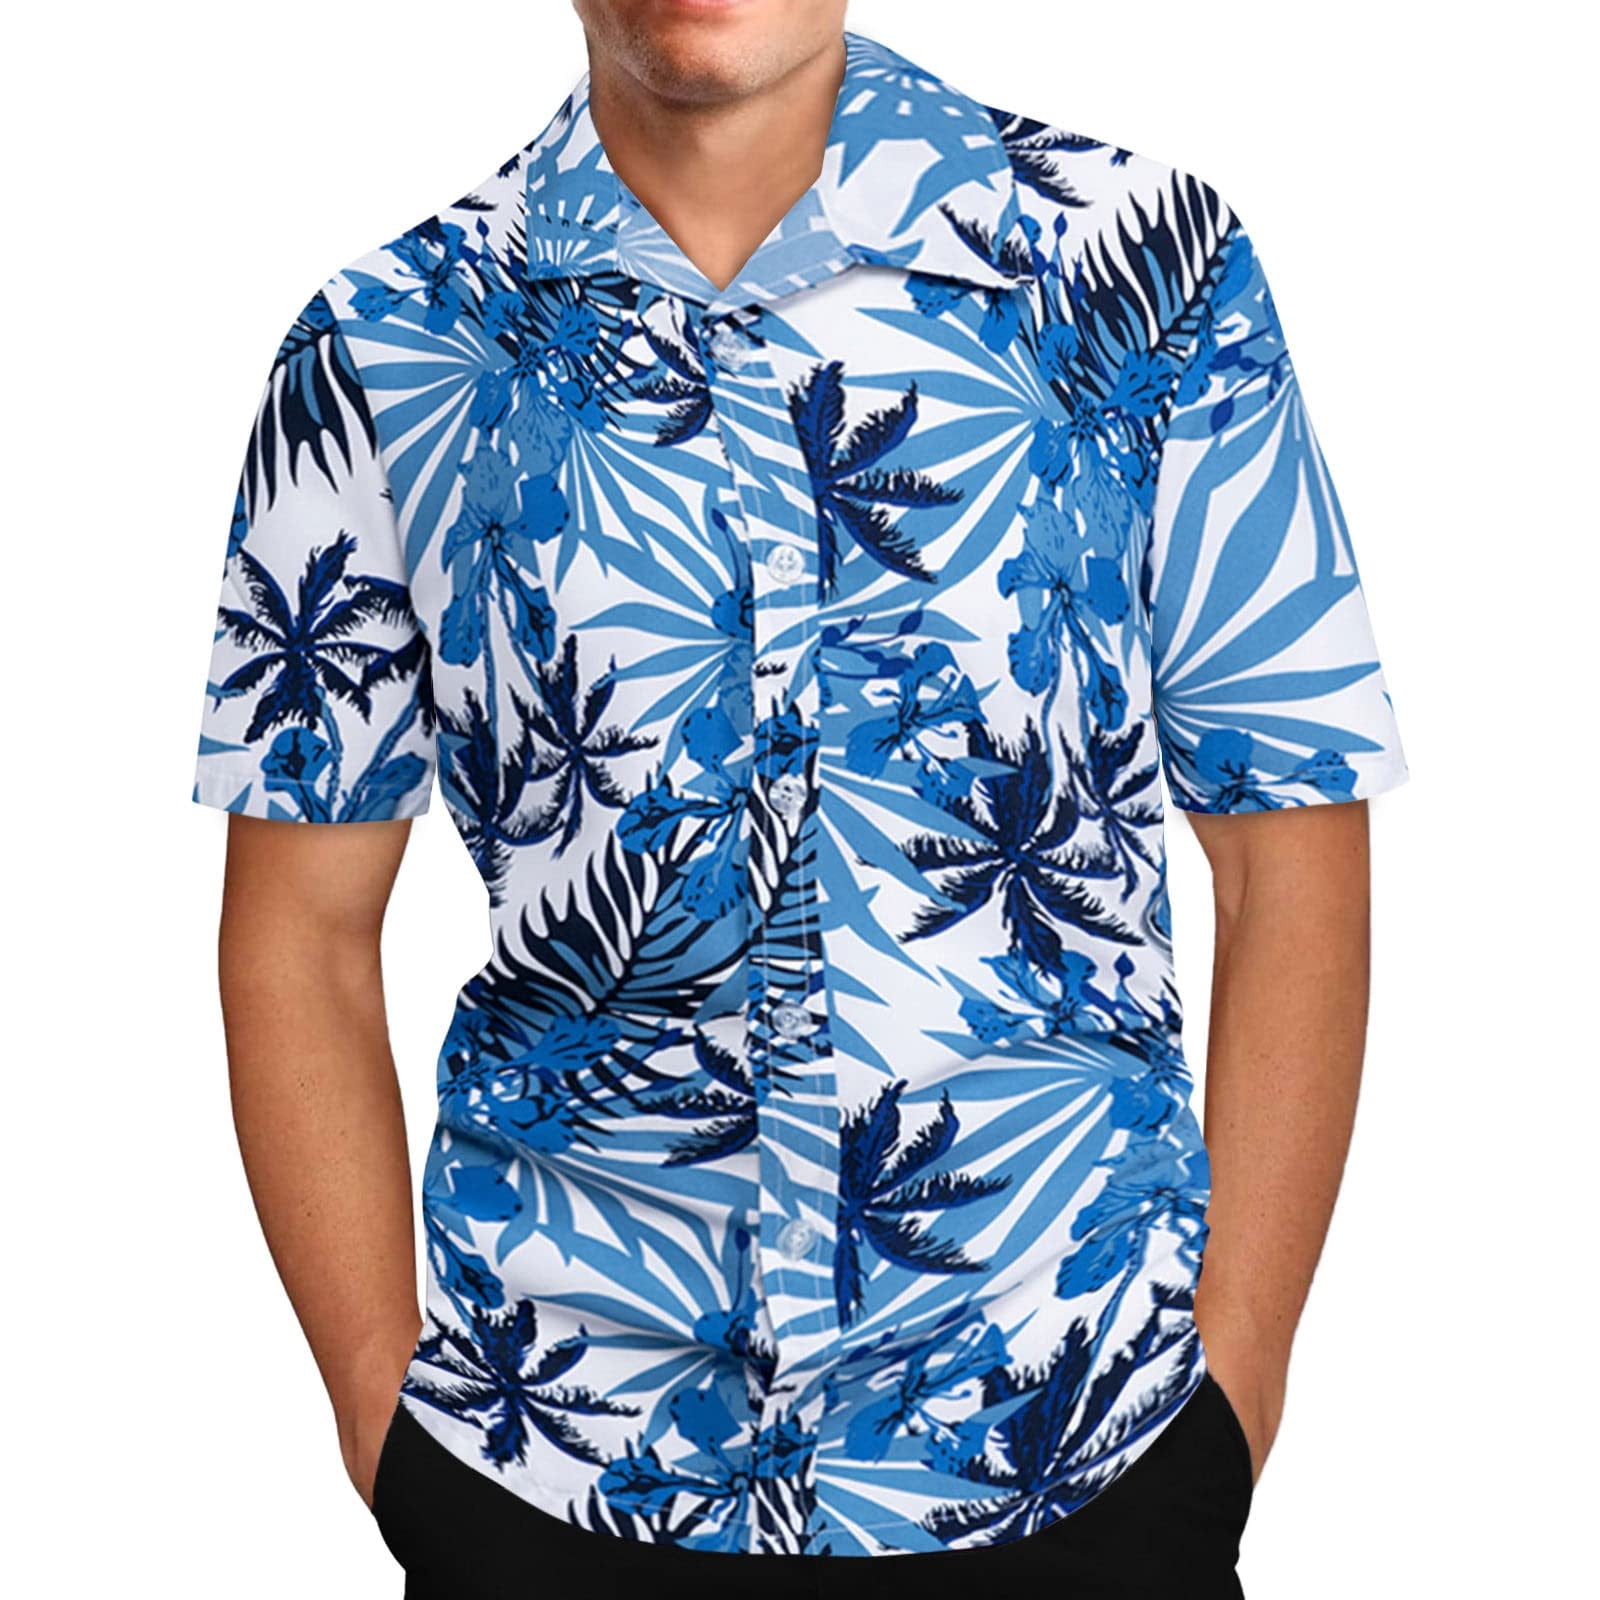 VSSSJ Casual Hawaiian Shirt for Men Short Sleeve Quick Dry Cruise Beach  Lapel Button Down Shirts Relaxed Fit Tropical Graphic Tees Blue XXXXL 